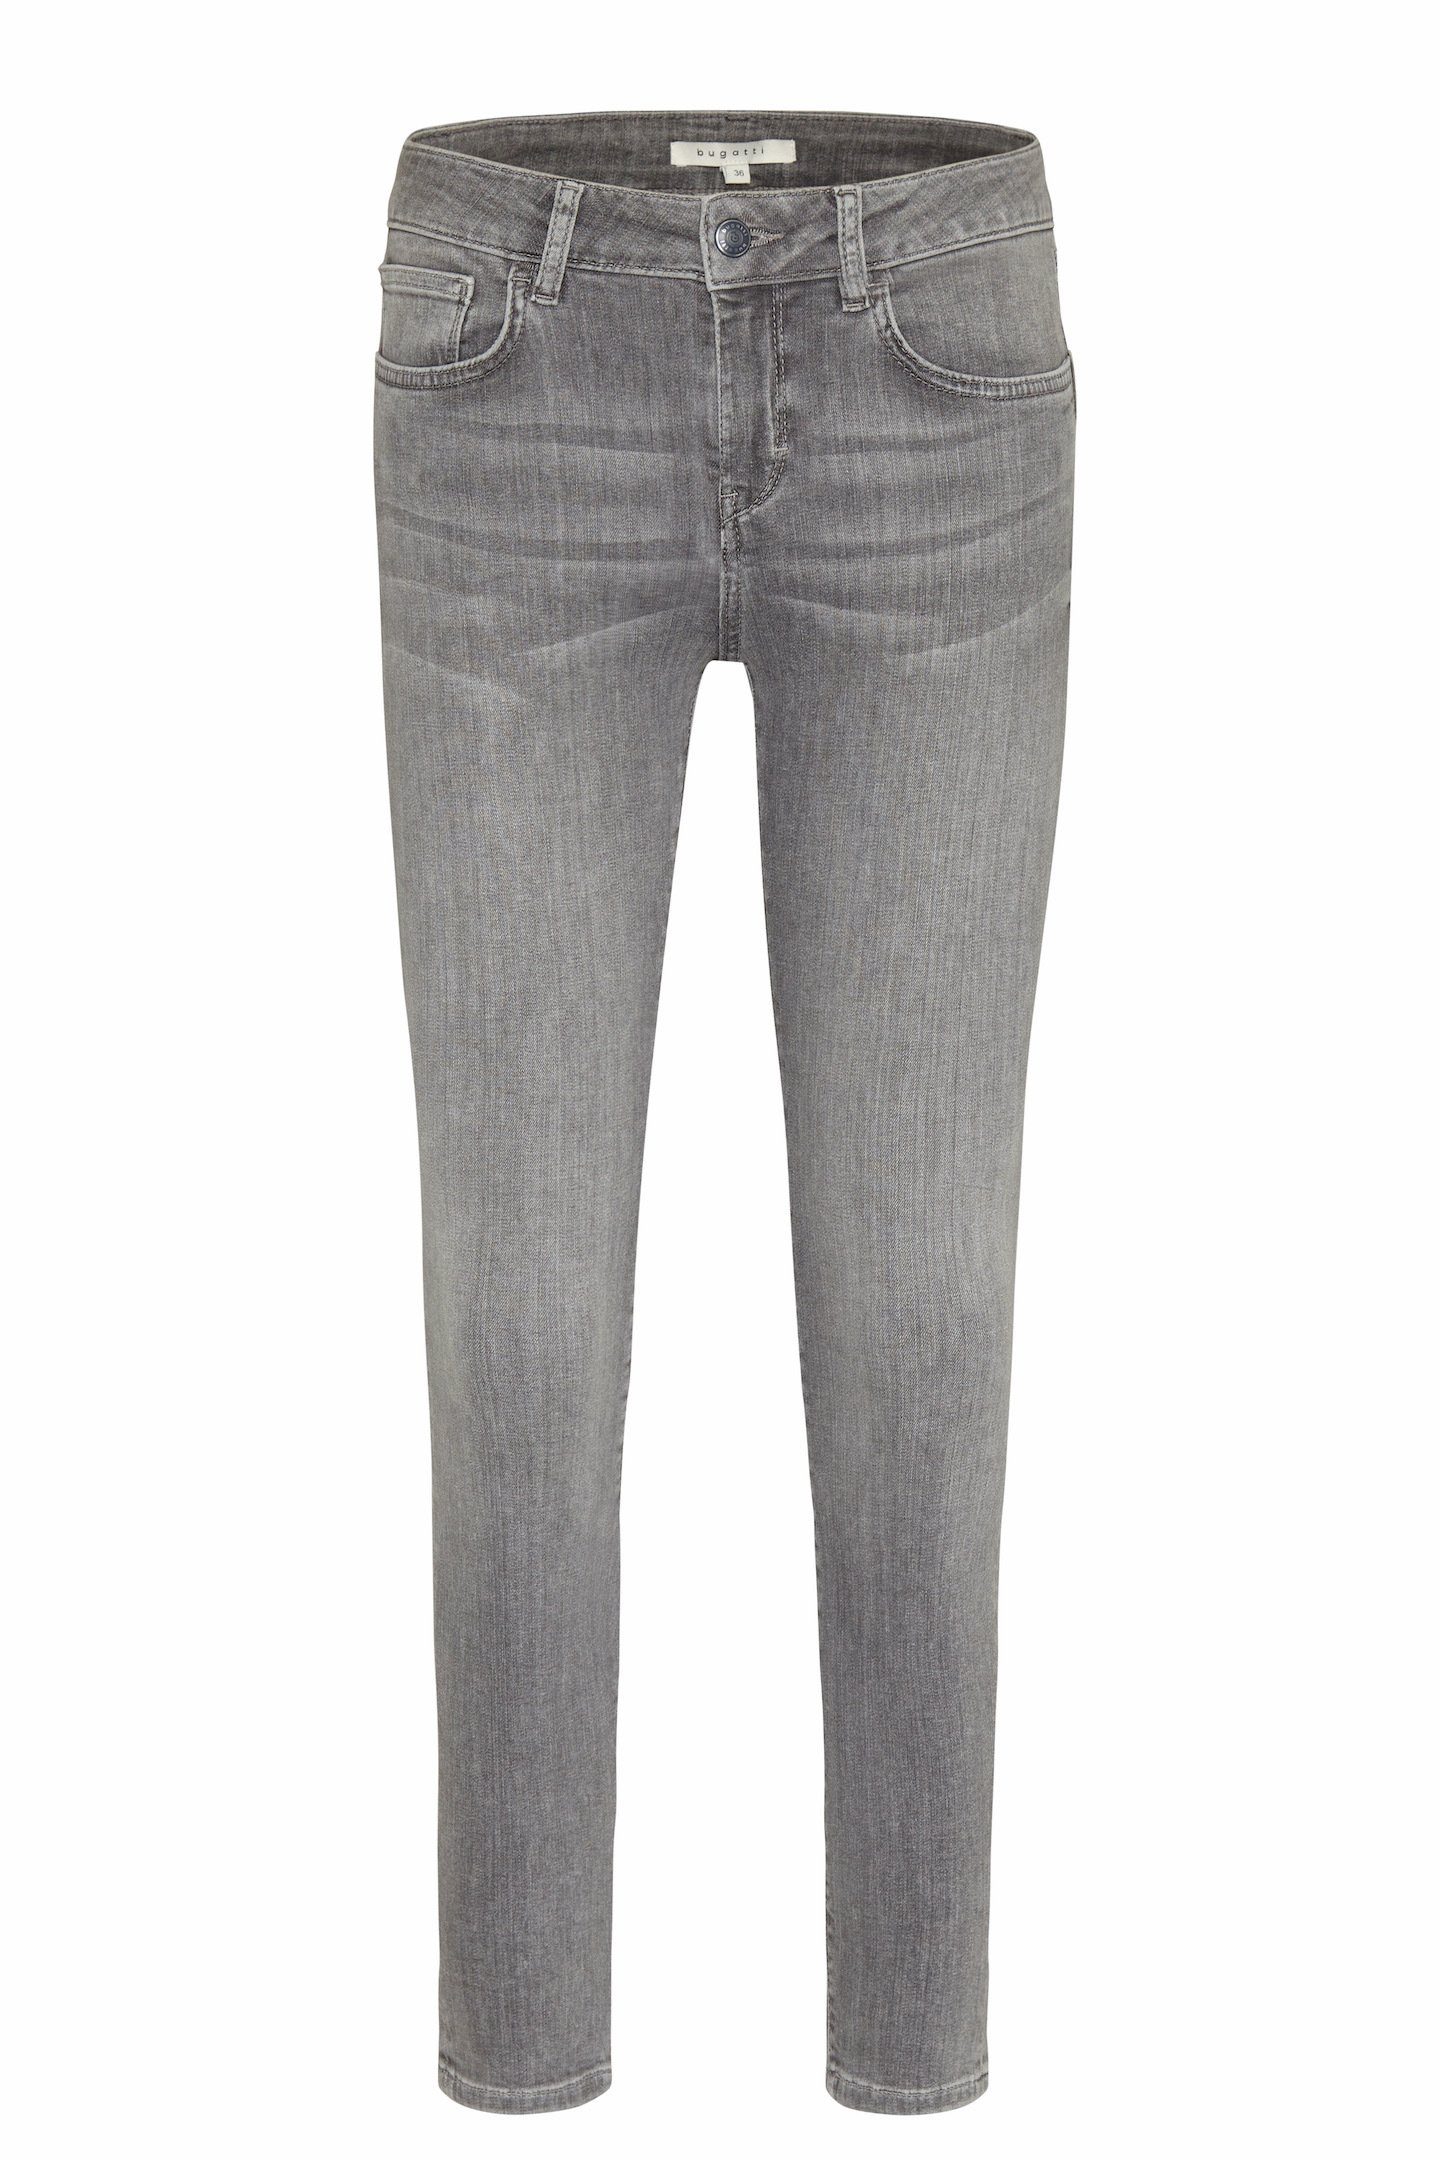 bugatti 5-Pocket-Jeans leichte Used-Waschung grau